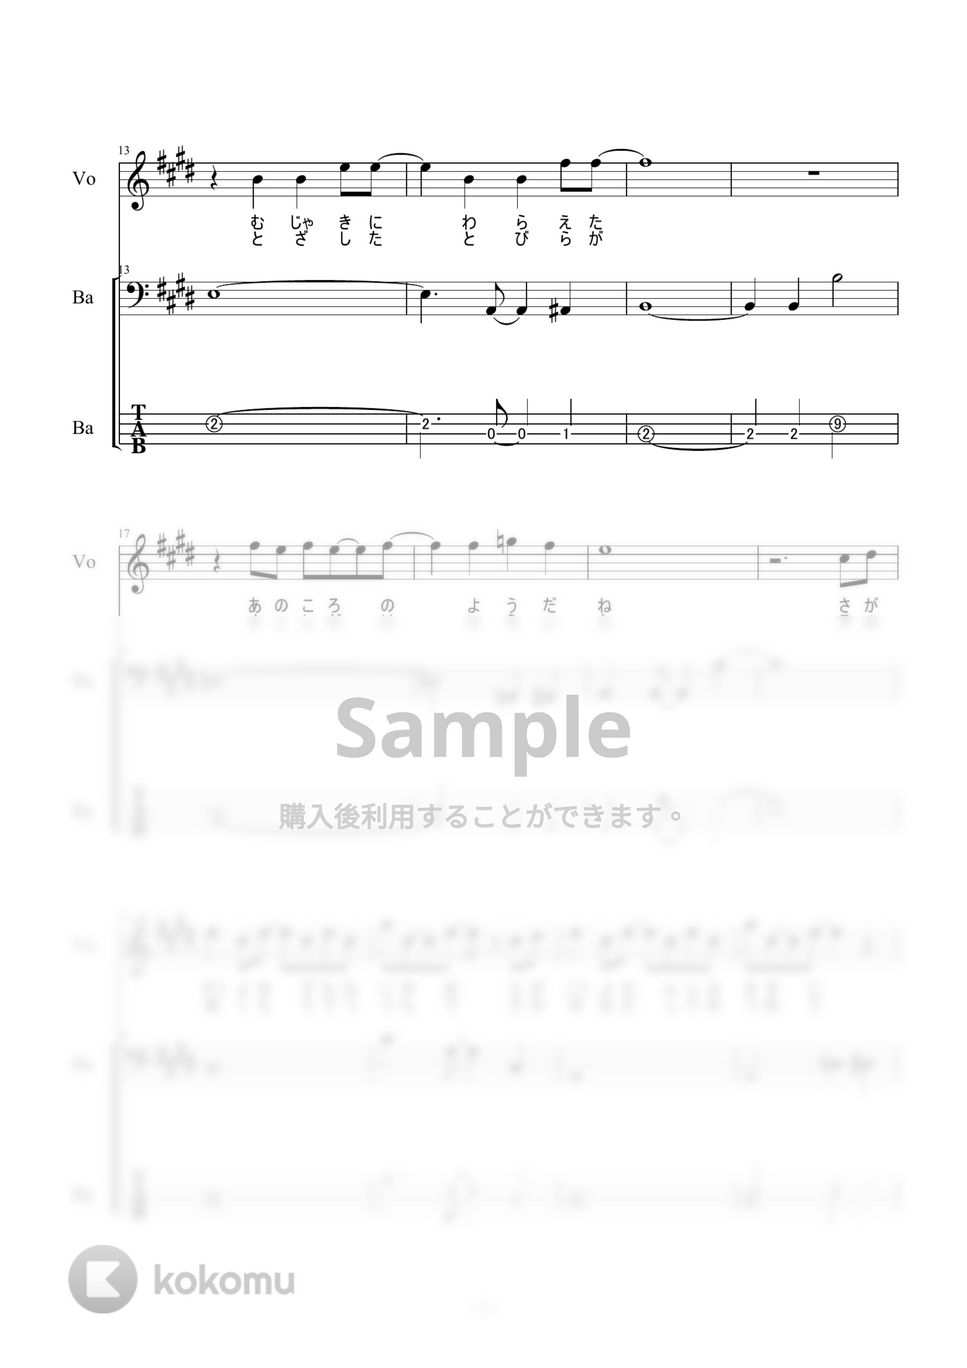 Machico - STAY FREE (ベース) by 二次元楽譜製作所